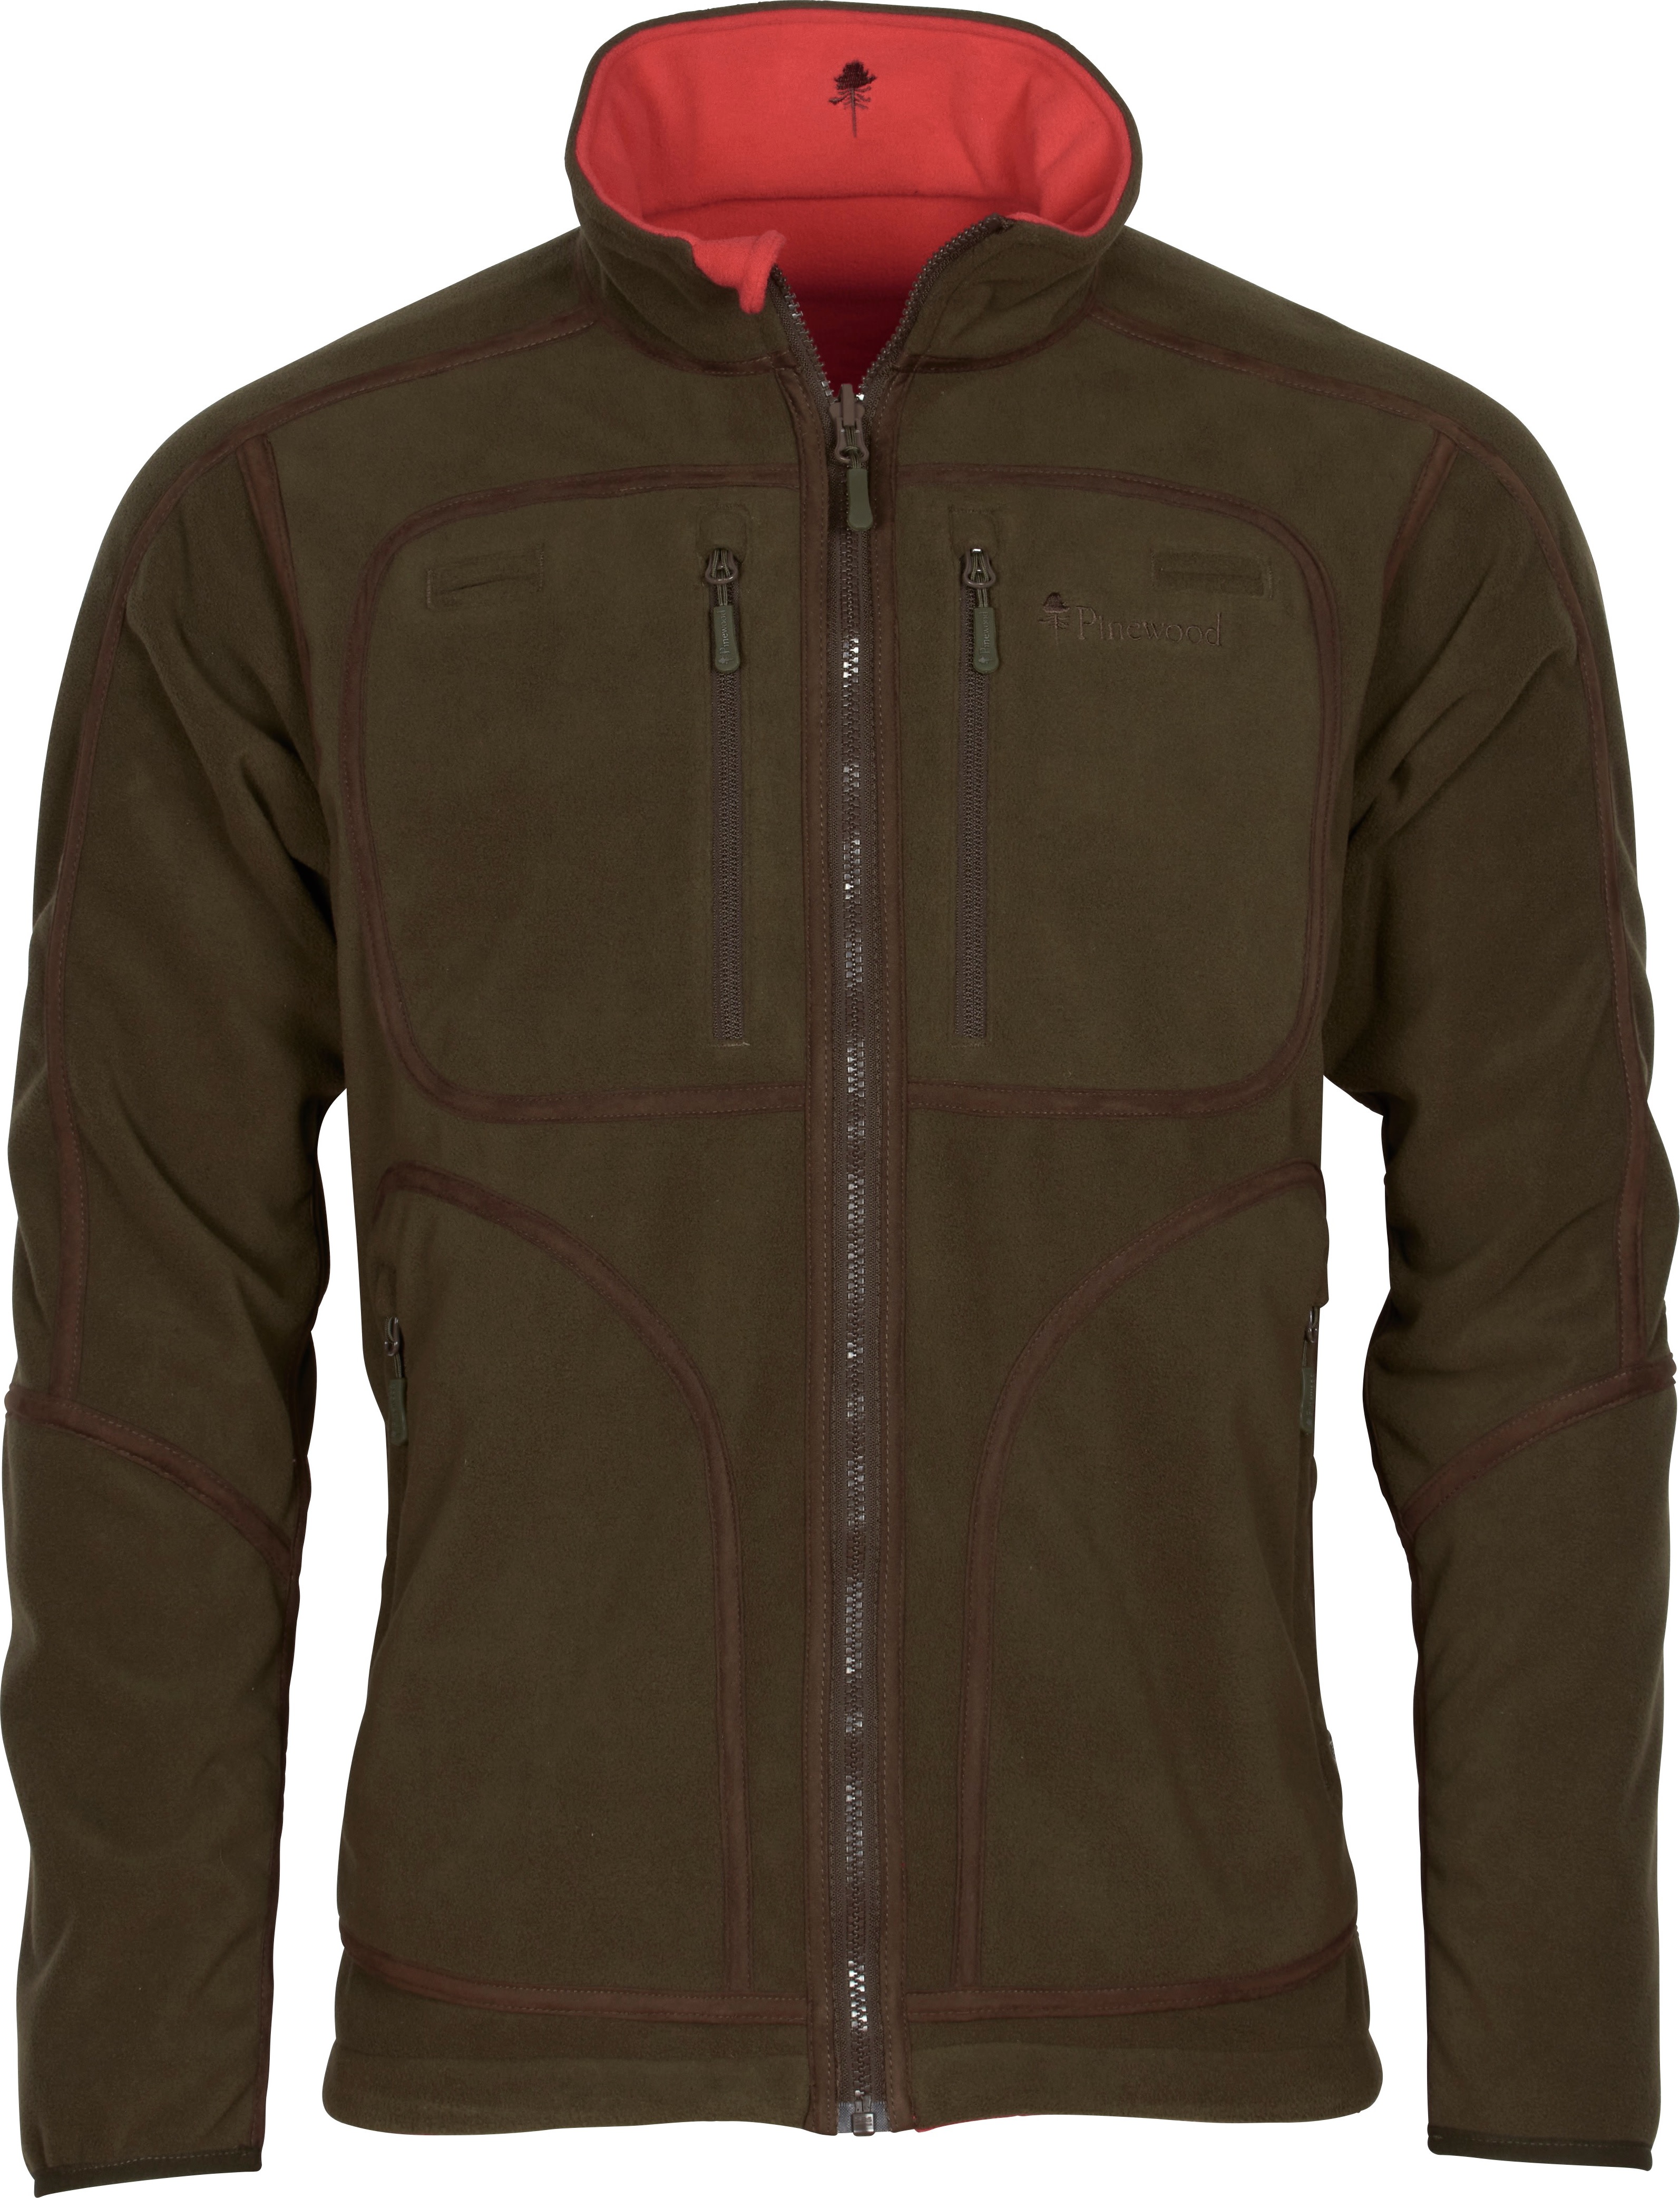 Pinewood Men’s Furudal Reversible Fleece Jacket Hunting Brown/Red